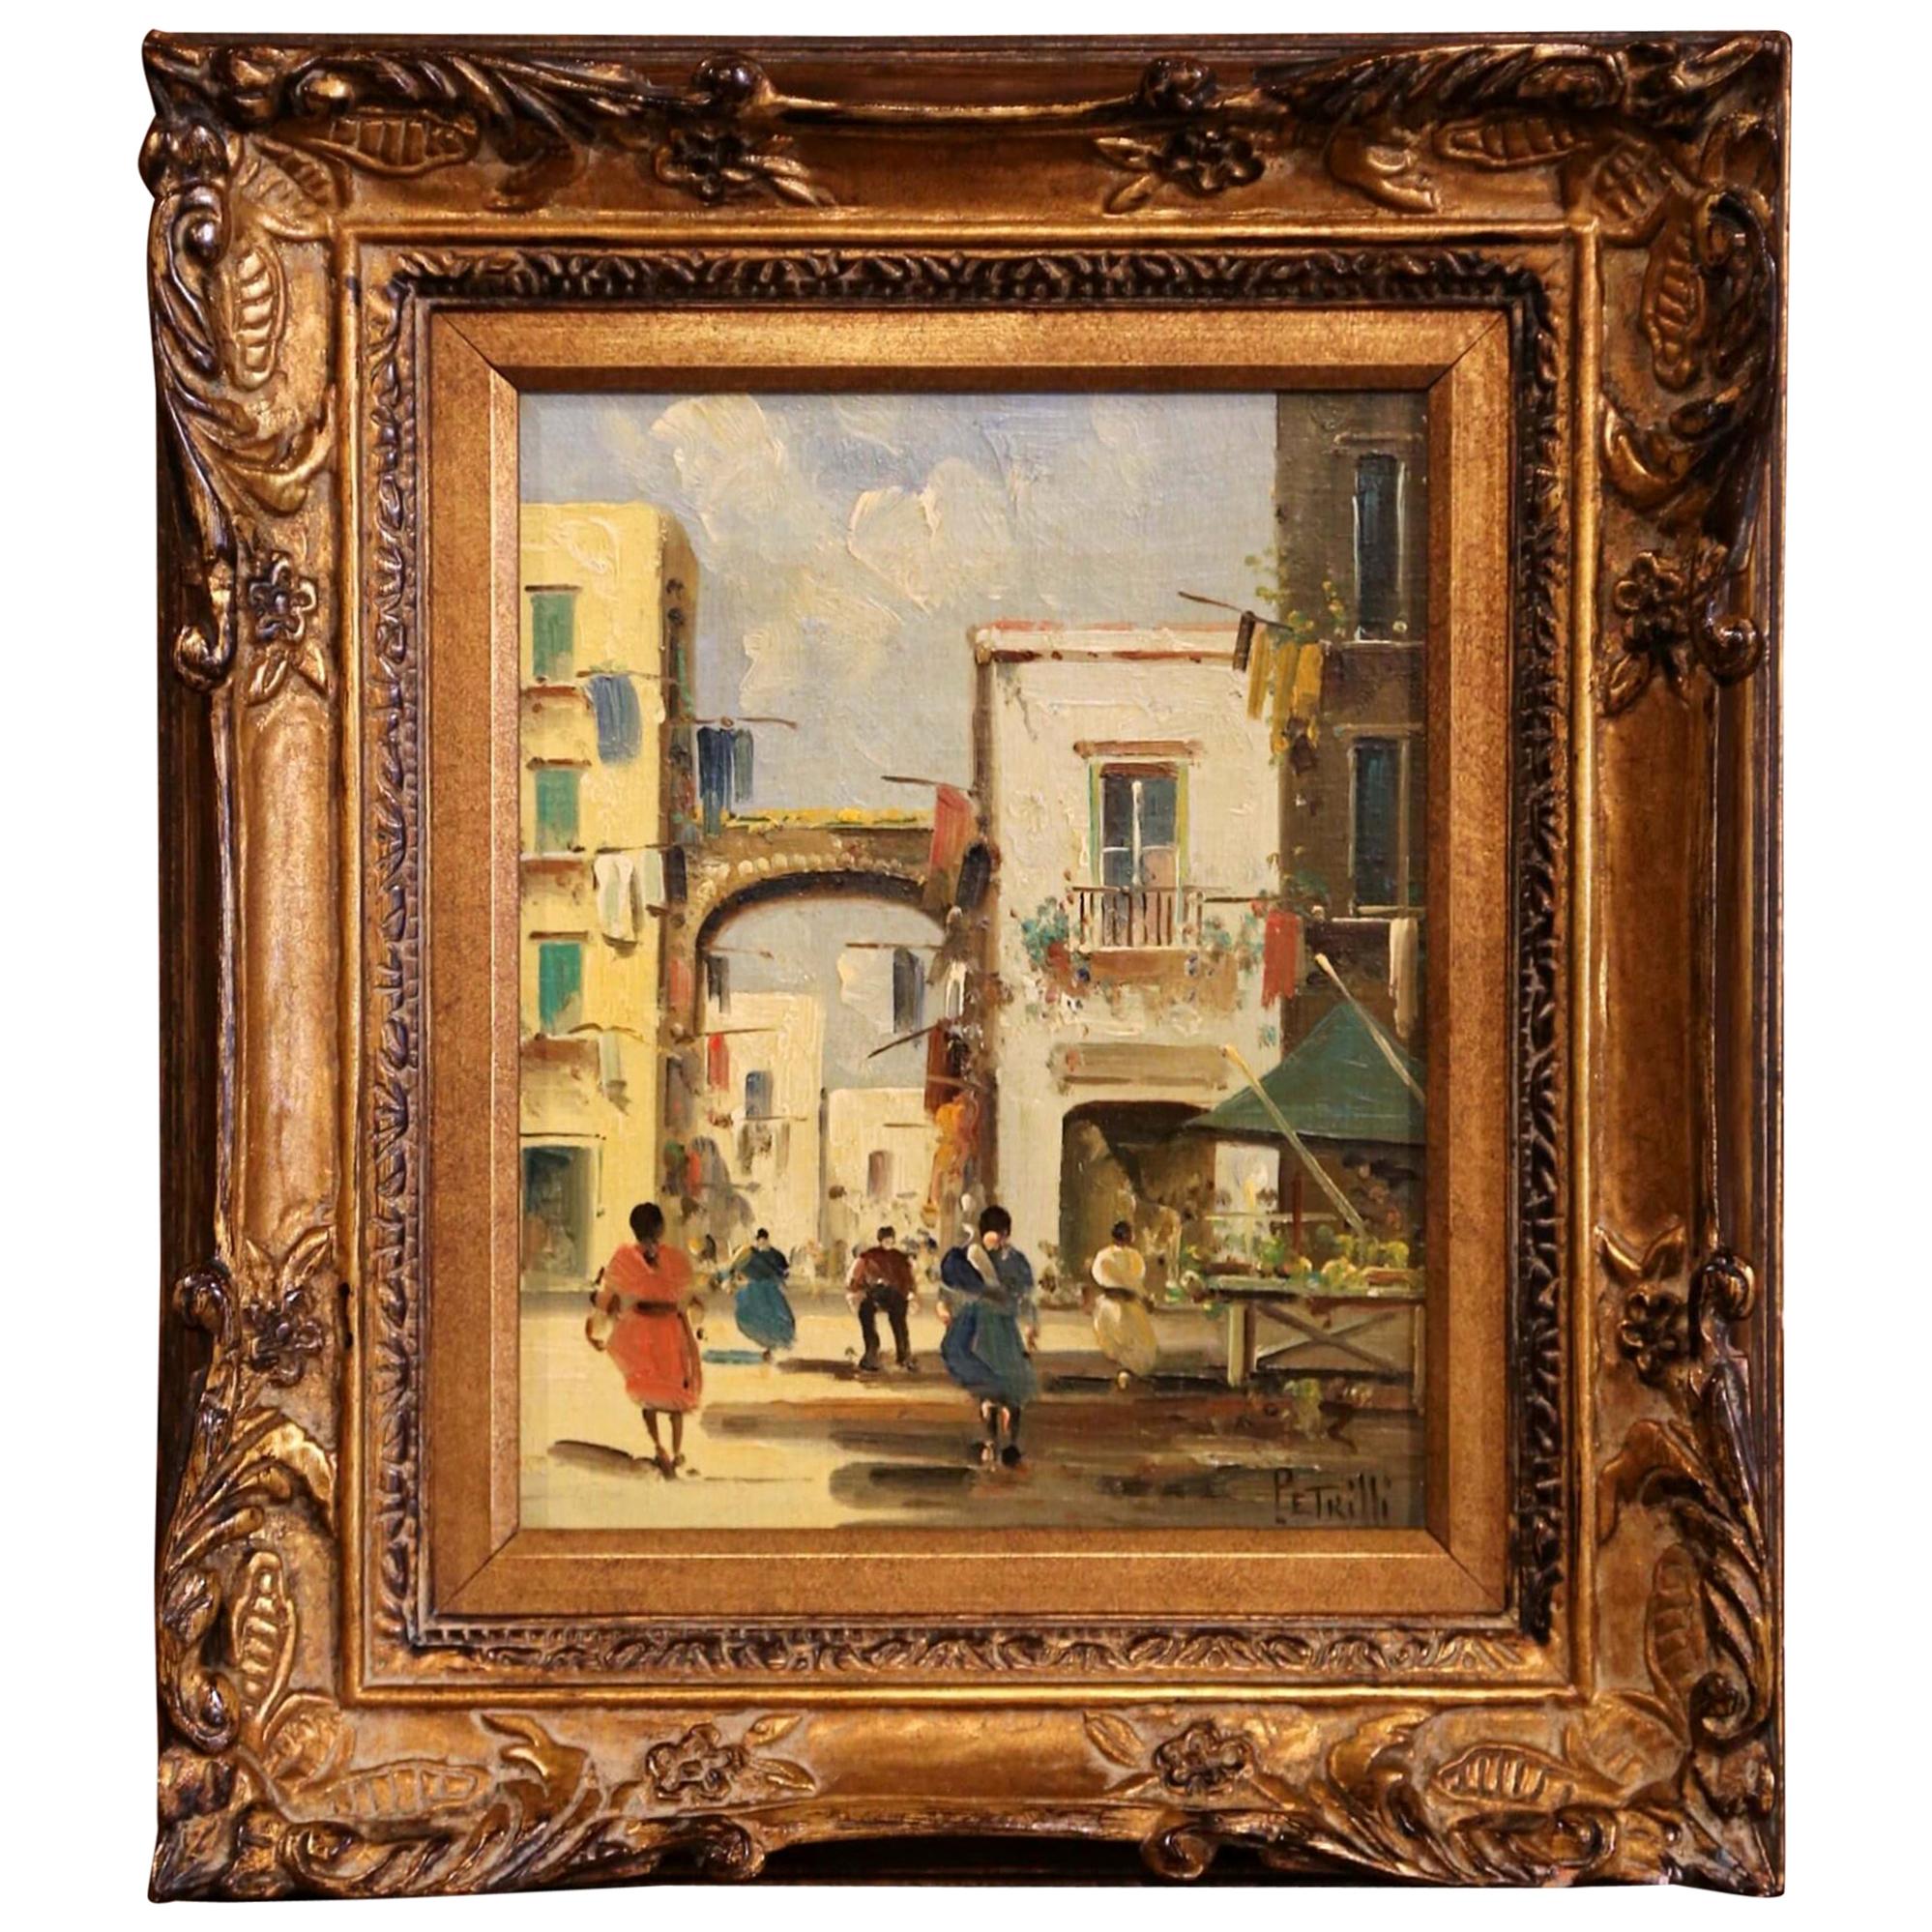 Early 20th Century Italian Street Scene Painting in Gilt Frame Signed Petrilli